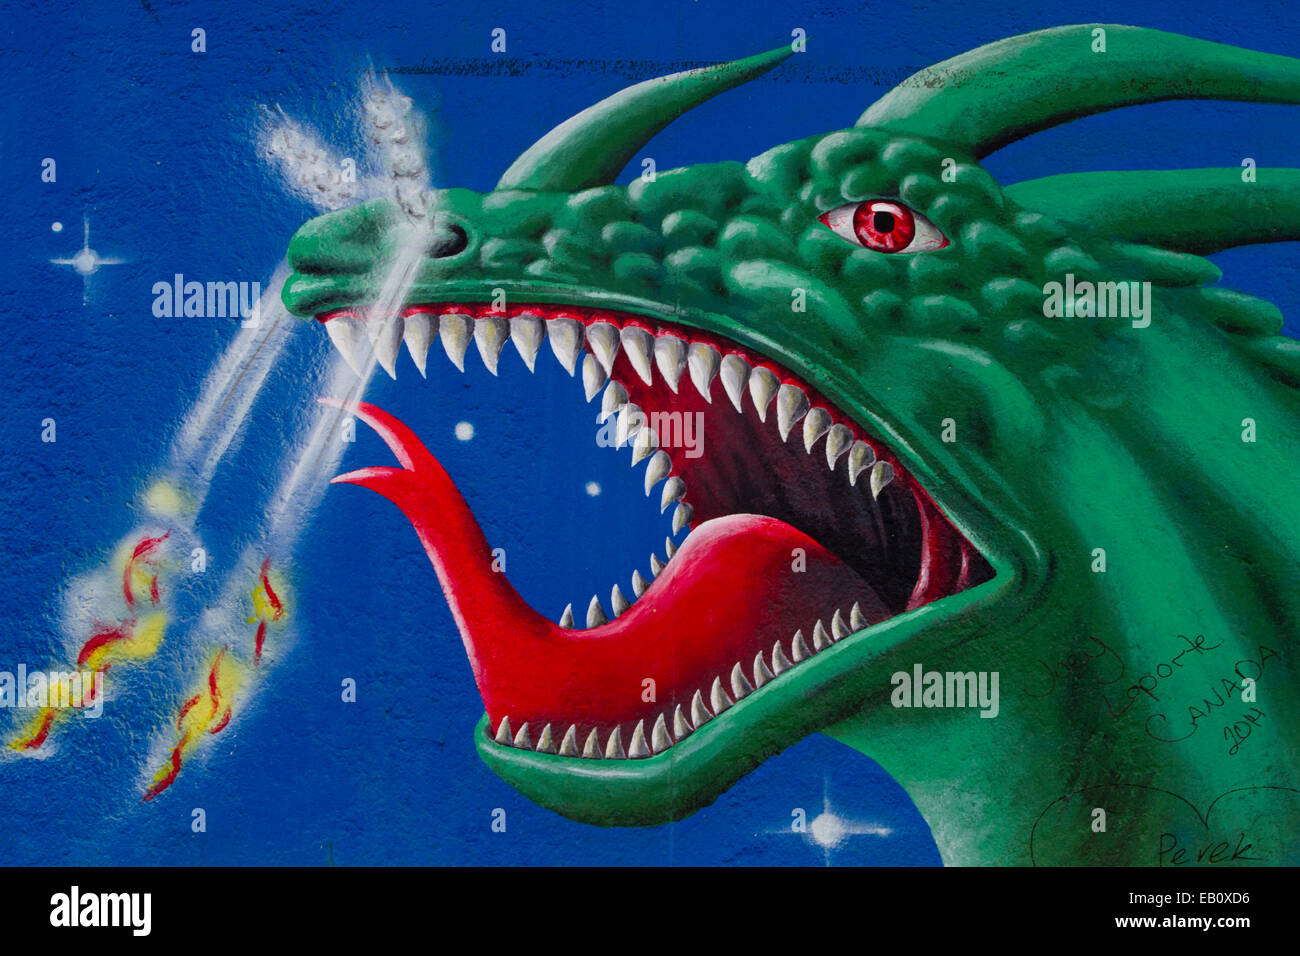 Berlin wall Street Art Graffiti Green Dragon monster Stock Photo